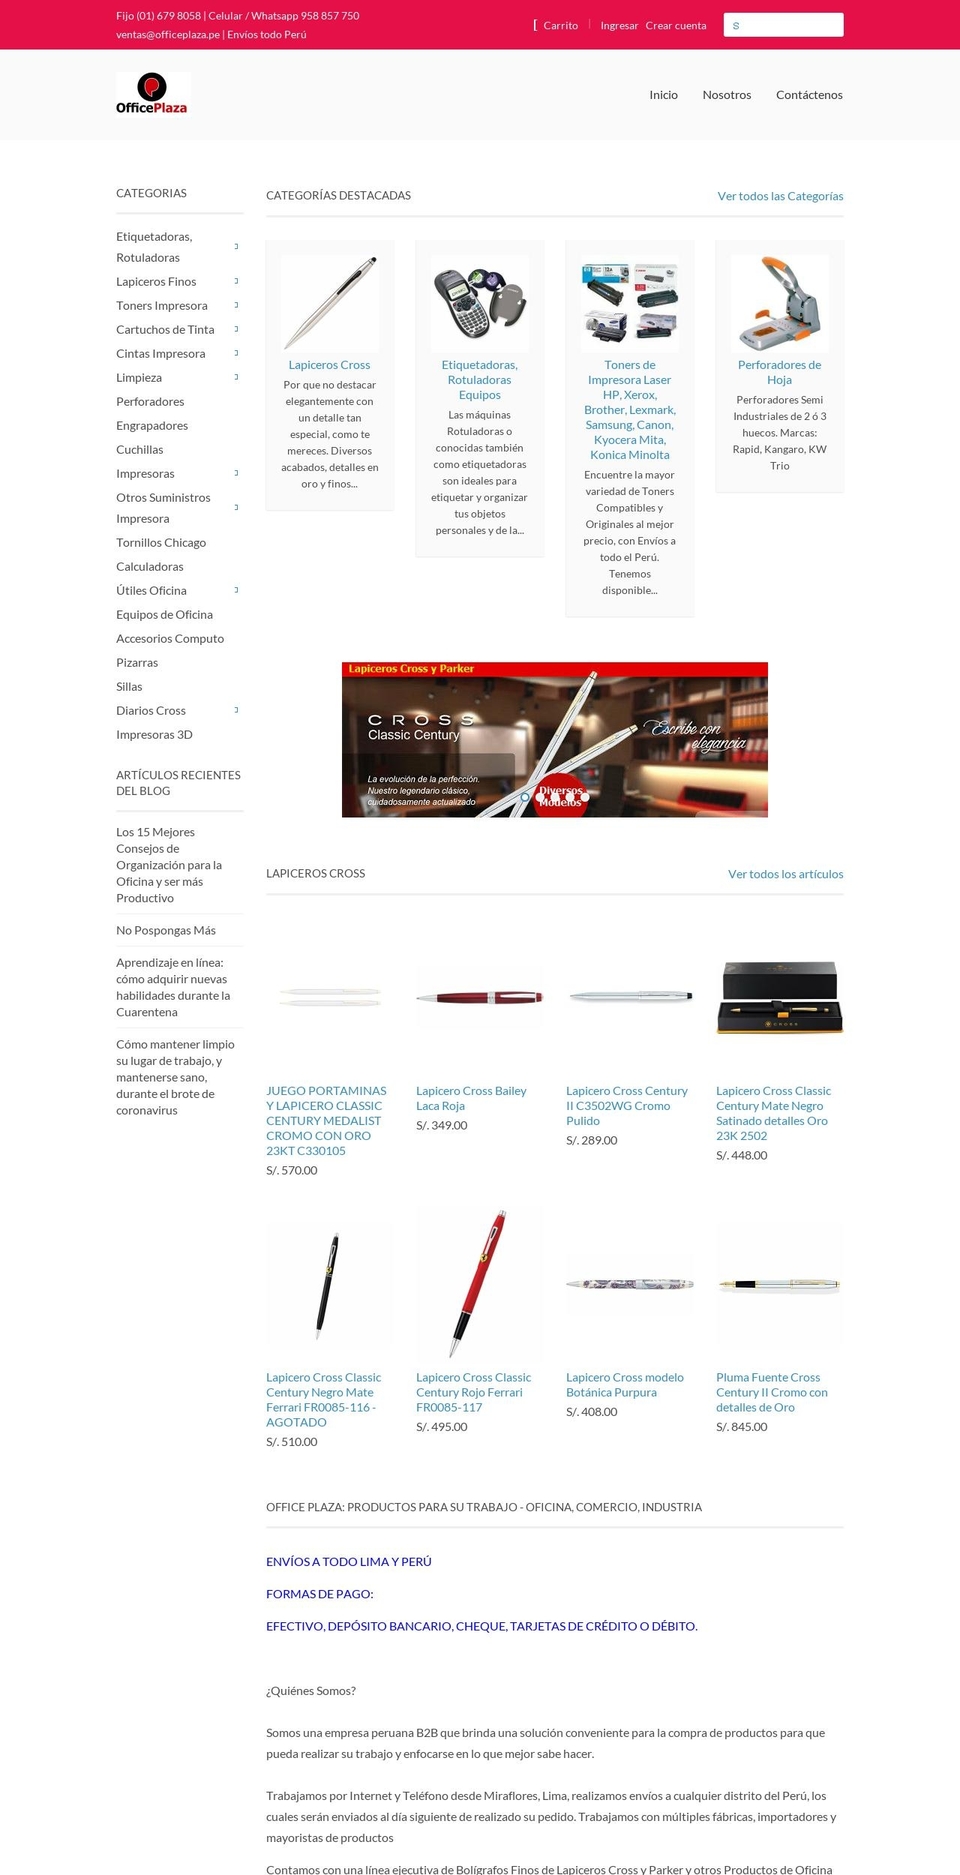 officeplaza.pe shopify website screenshot